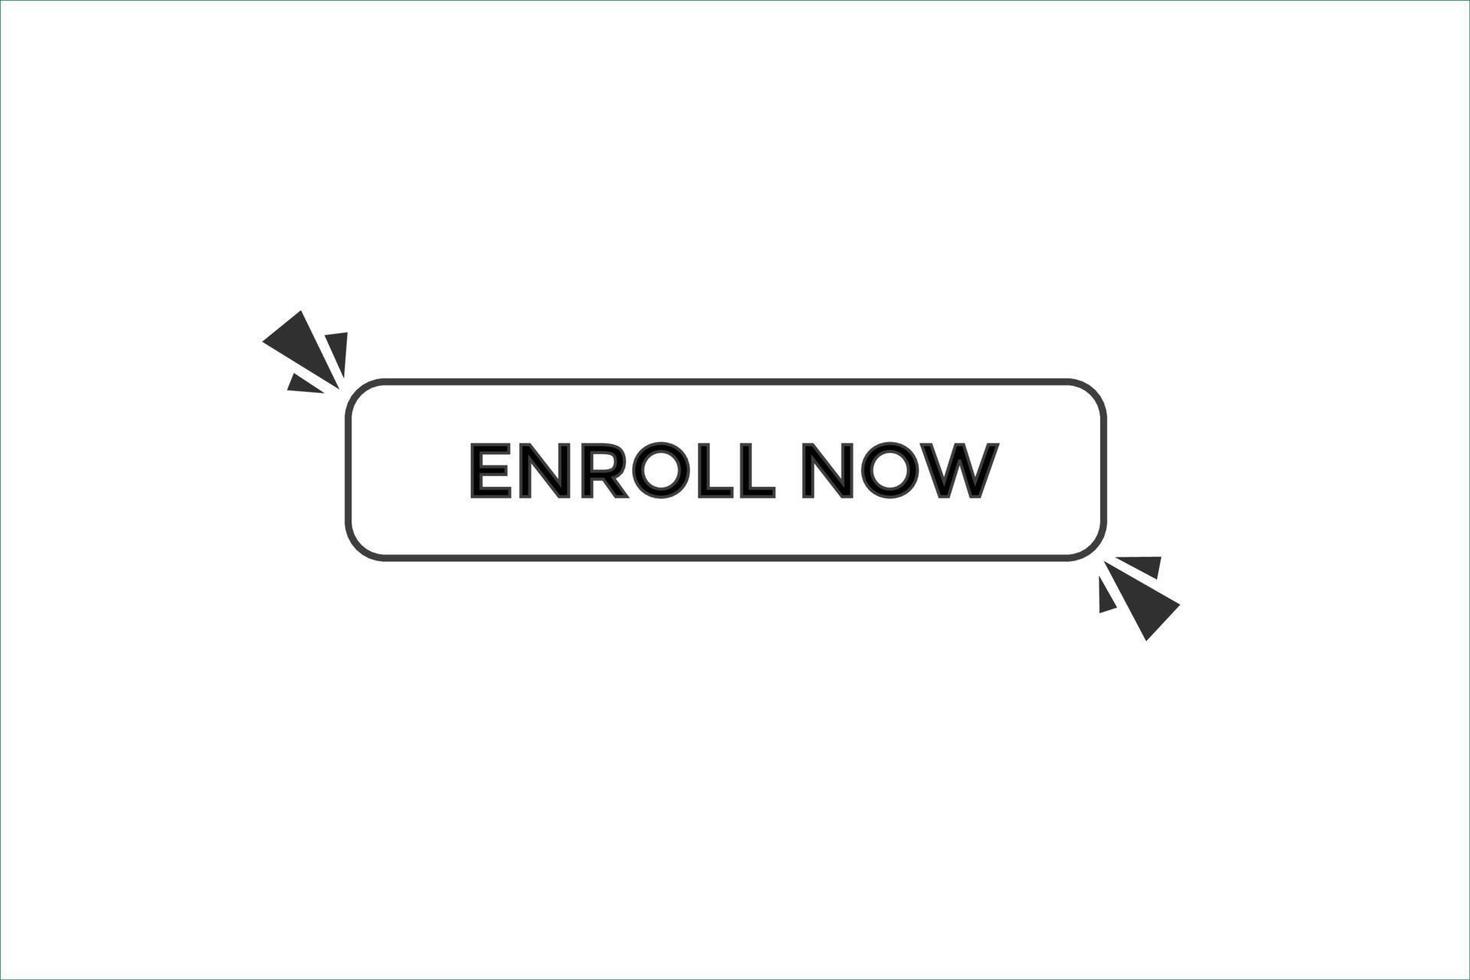 enroll now button vectors.sign label speech enroll now vector